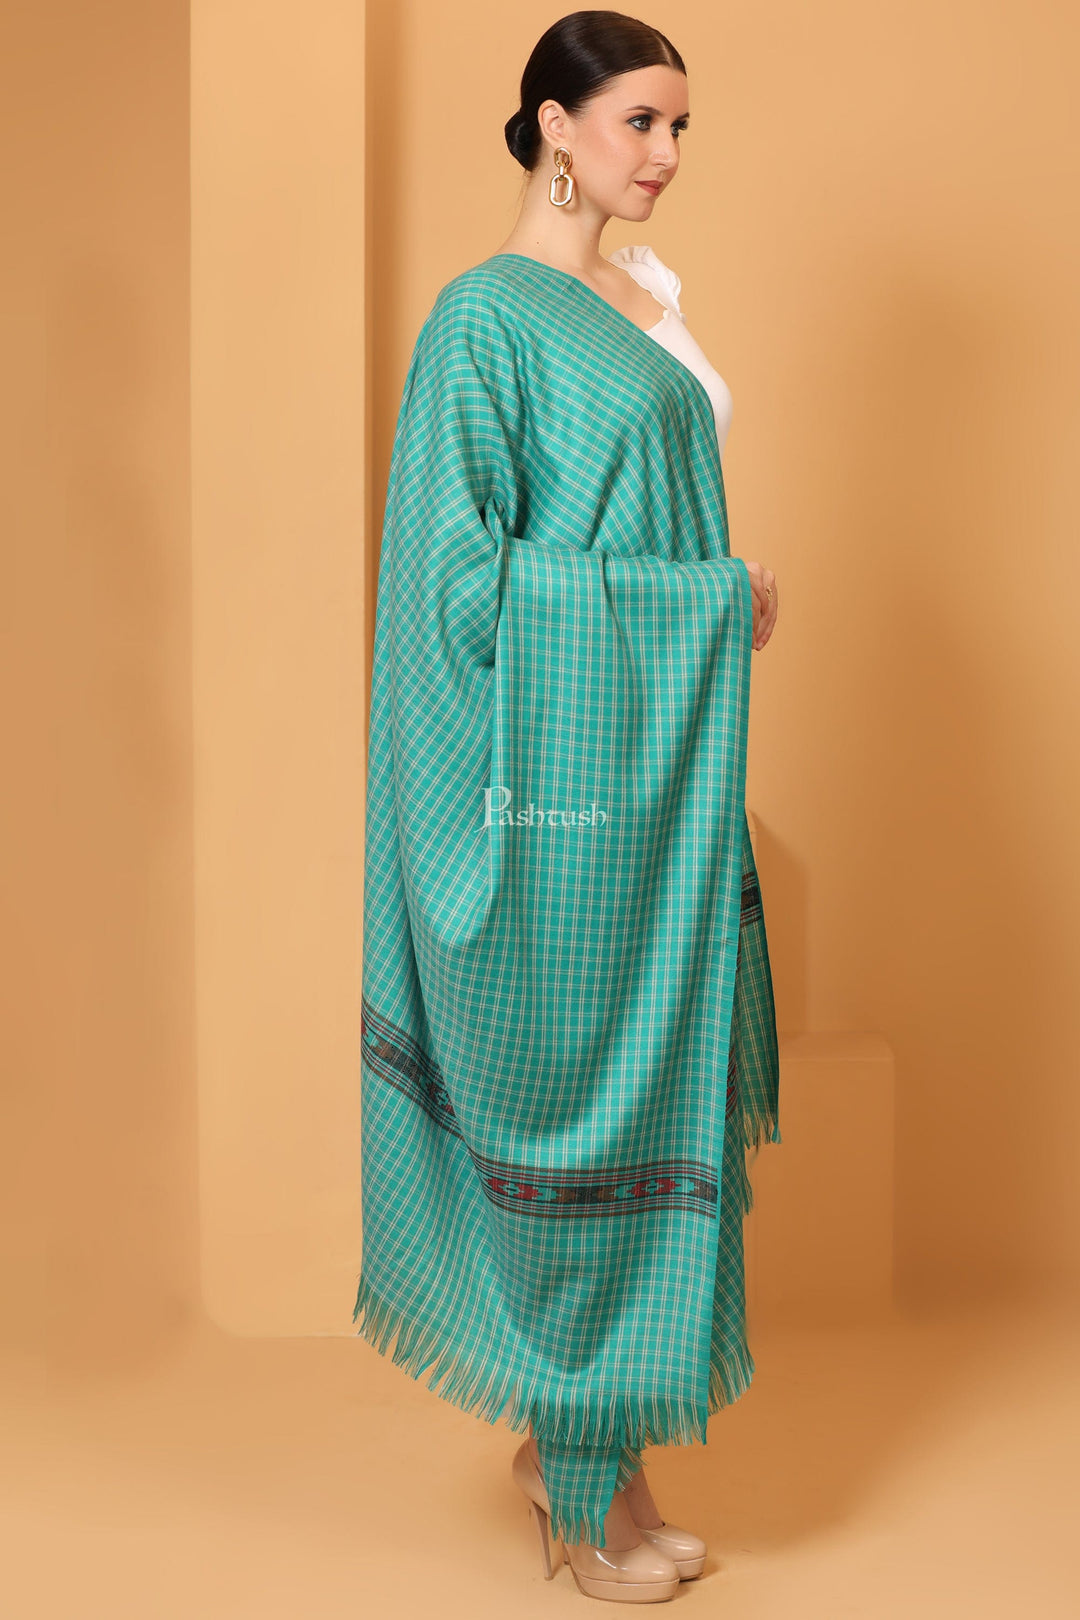 Pashtush India Womens Shawls Pashtush Womens Fine Wool Shawl, Aztec Weave, Woven Design, Sea Green